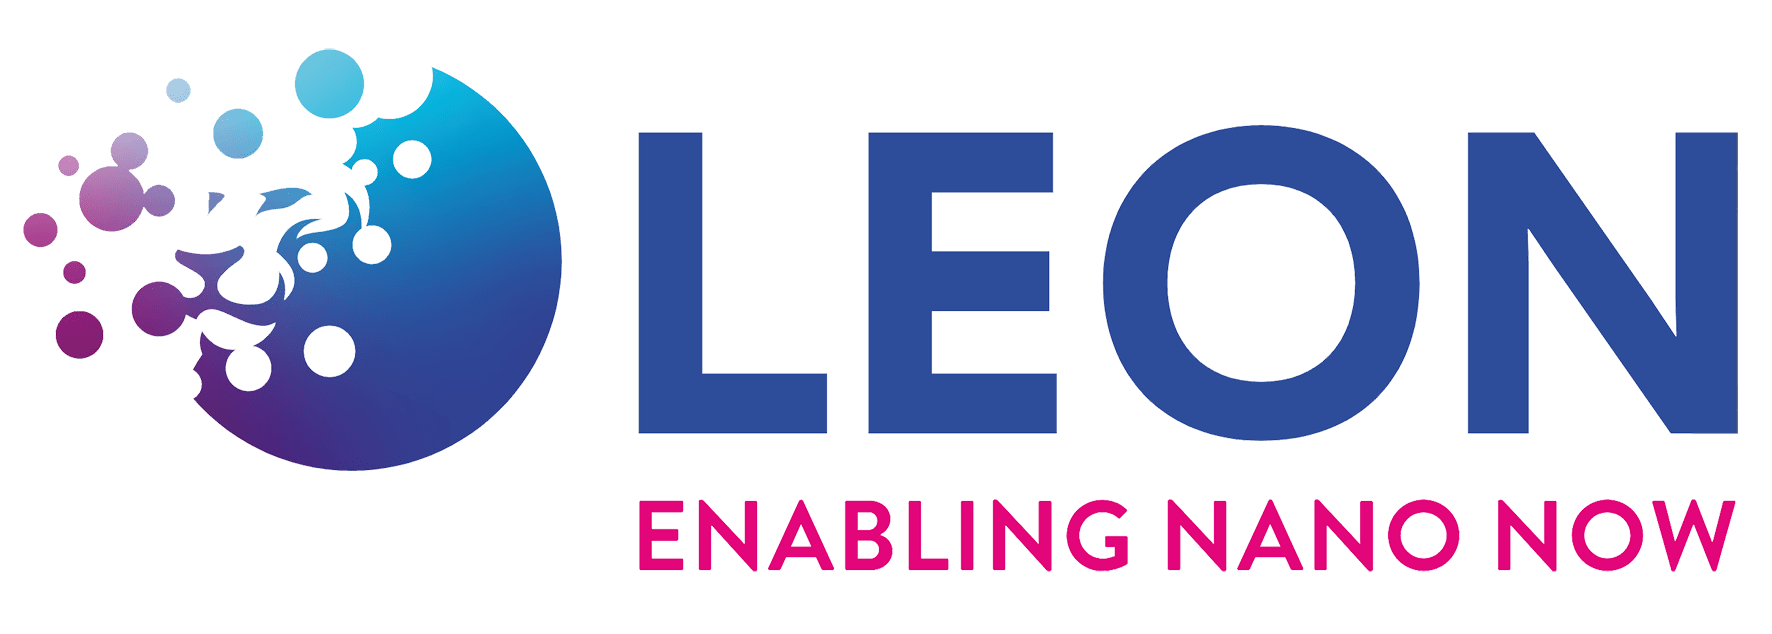 Leon Nanodrugs GmbH Logo